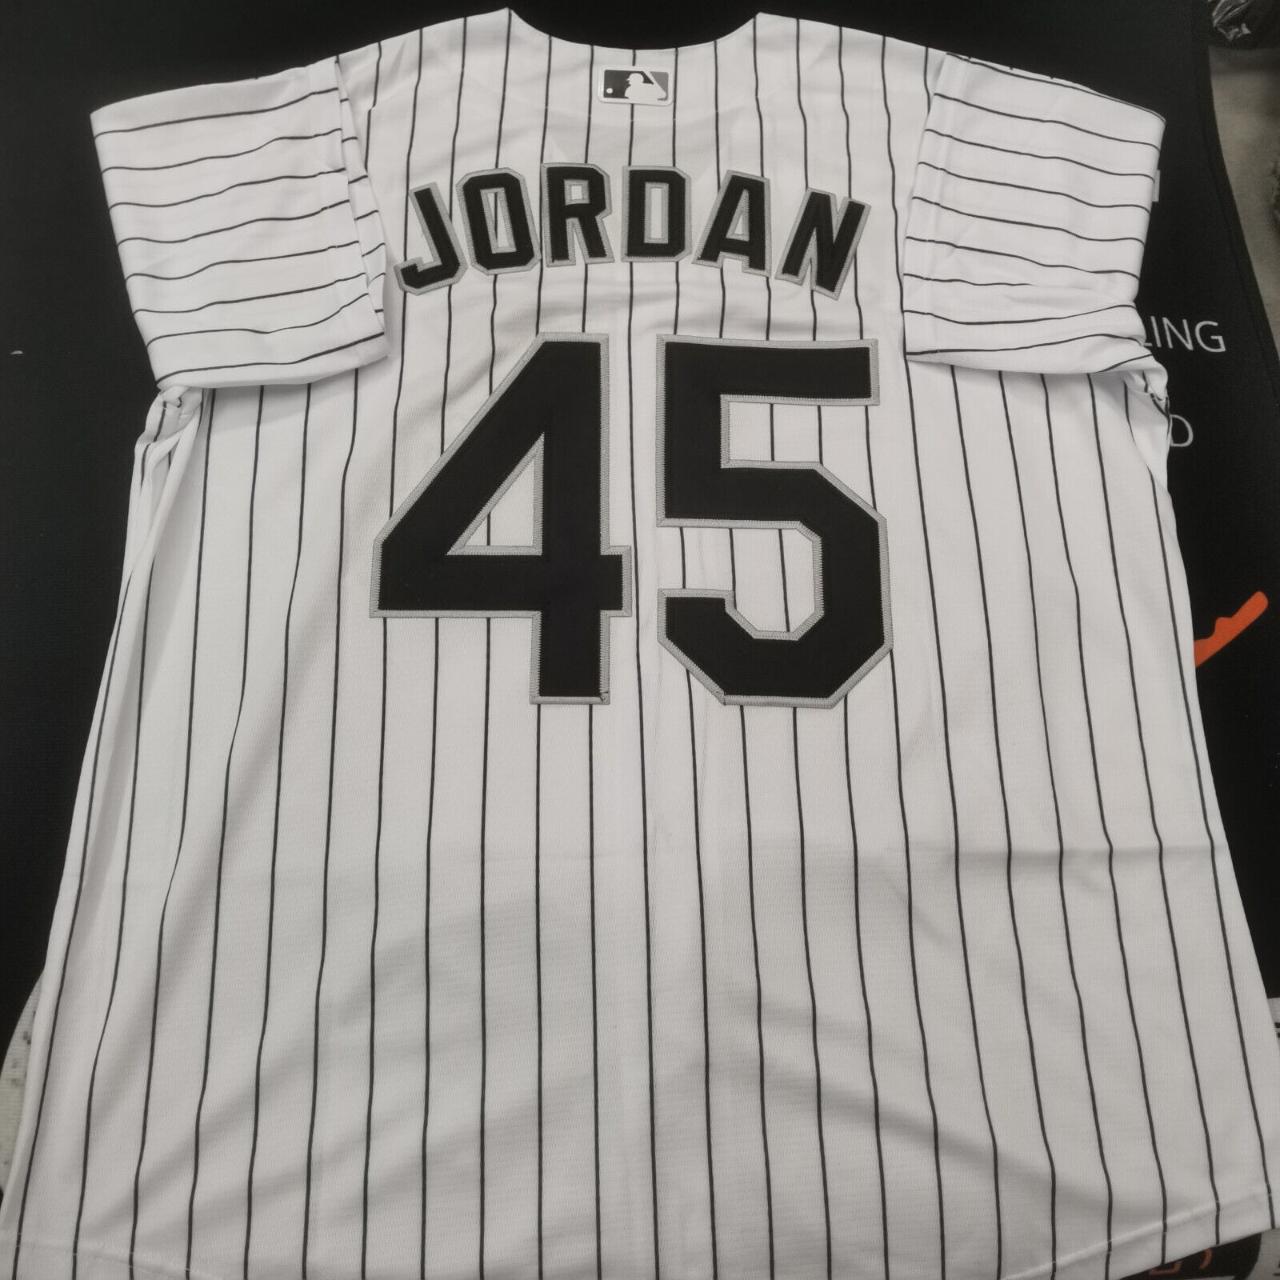 Jordan #45 baseball jersey shirt Size L Cotton - Depop